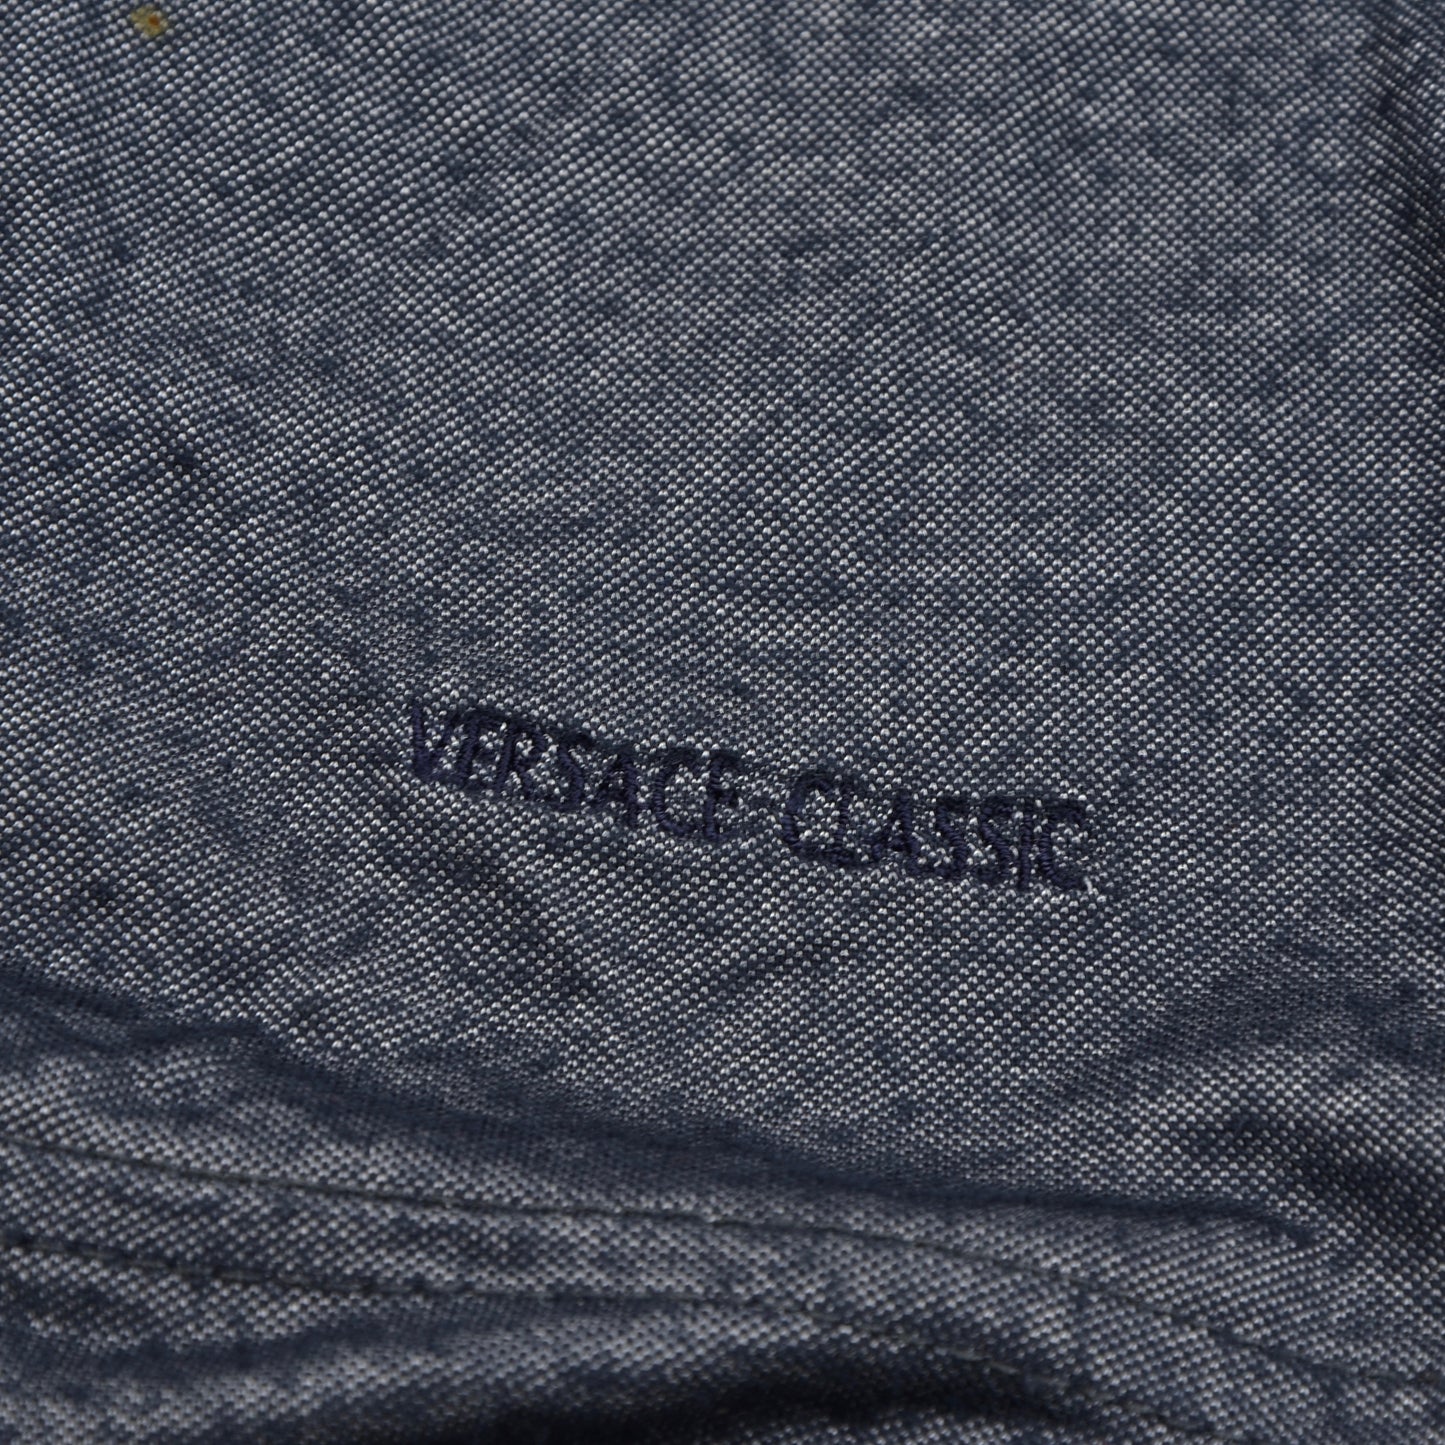 Versace Classic Stretch Polo Shirt Size XXL - Metallic Charcoal